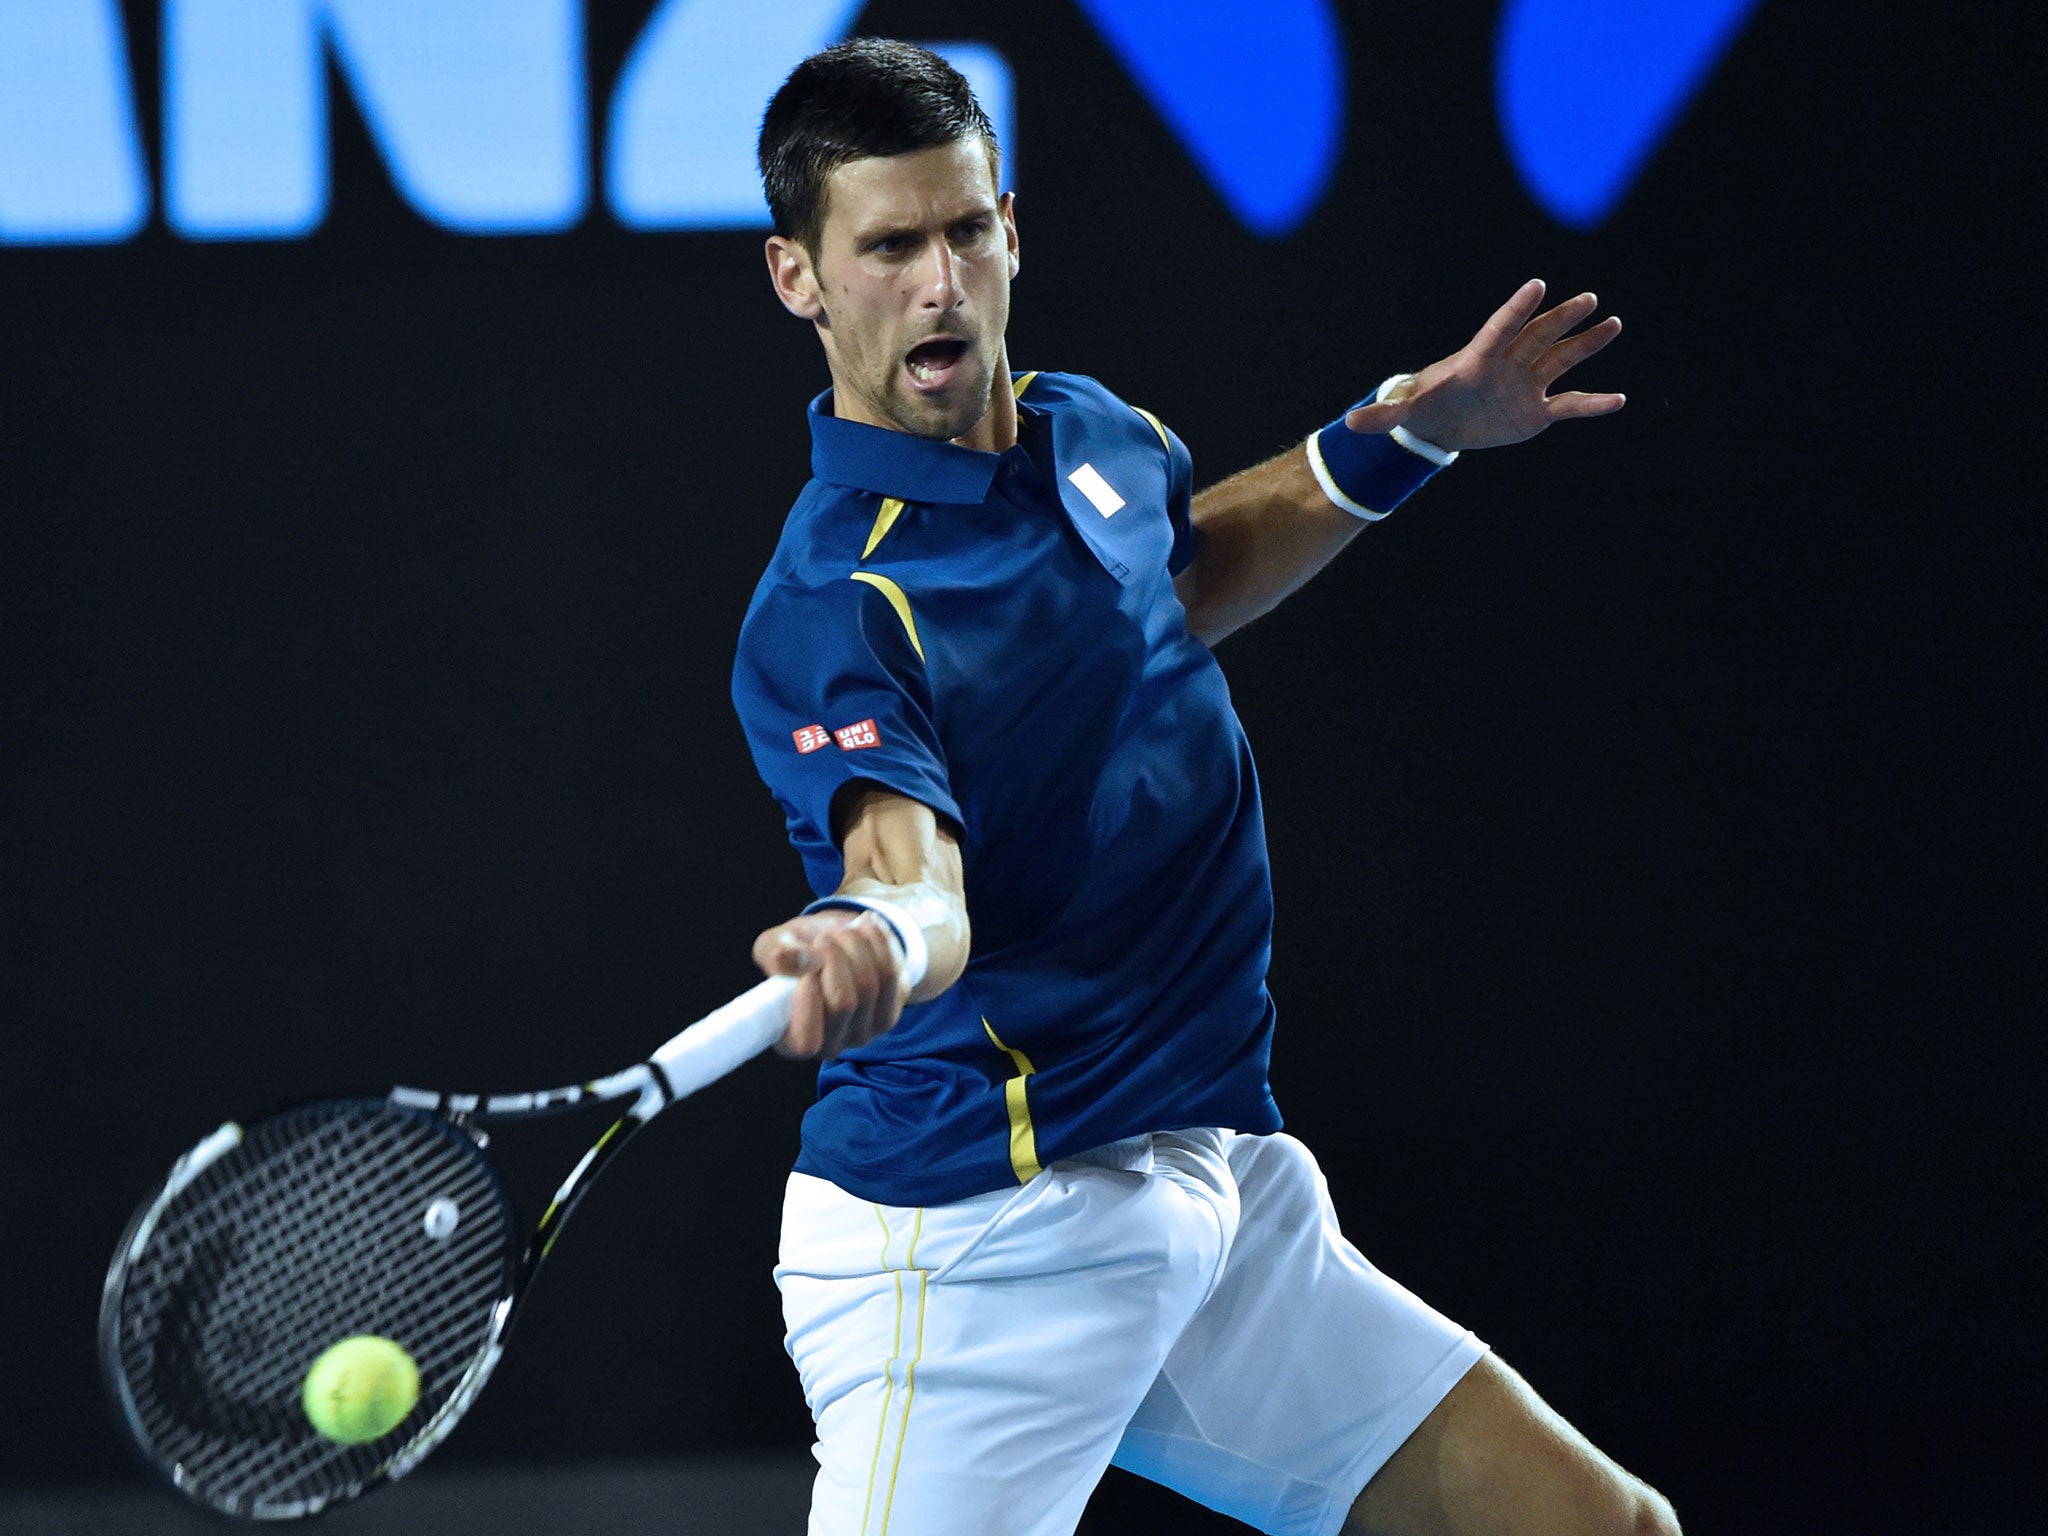 Novak Djokovic will face Roger Federer in the Australian Open semi-finals